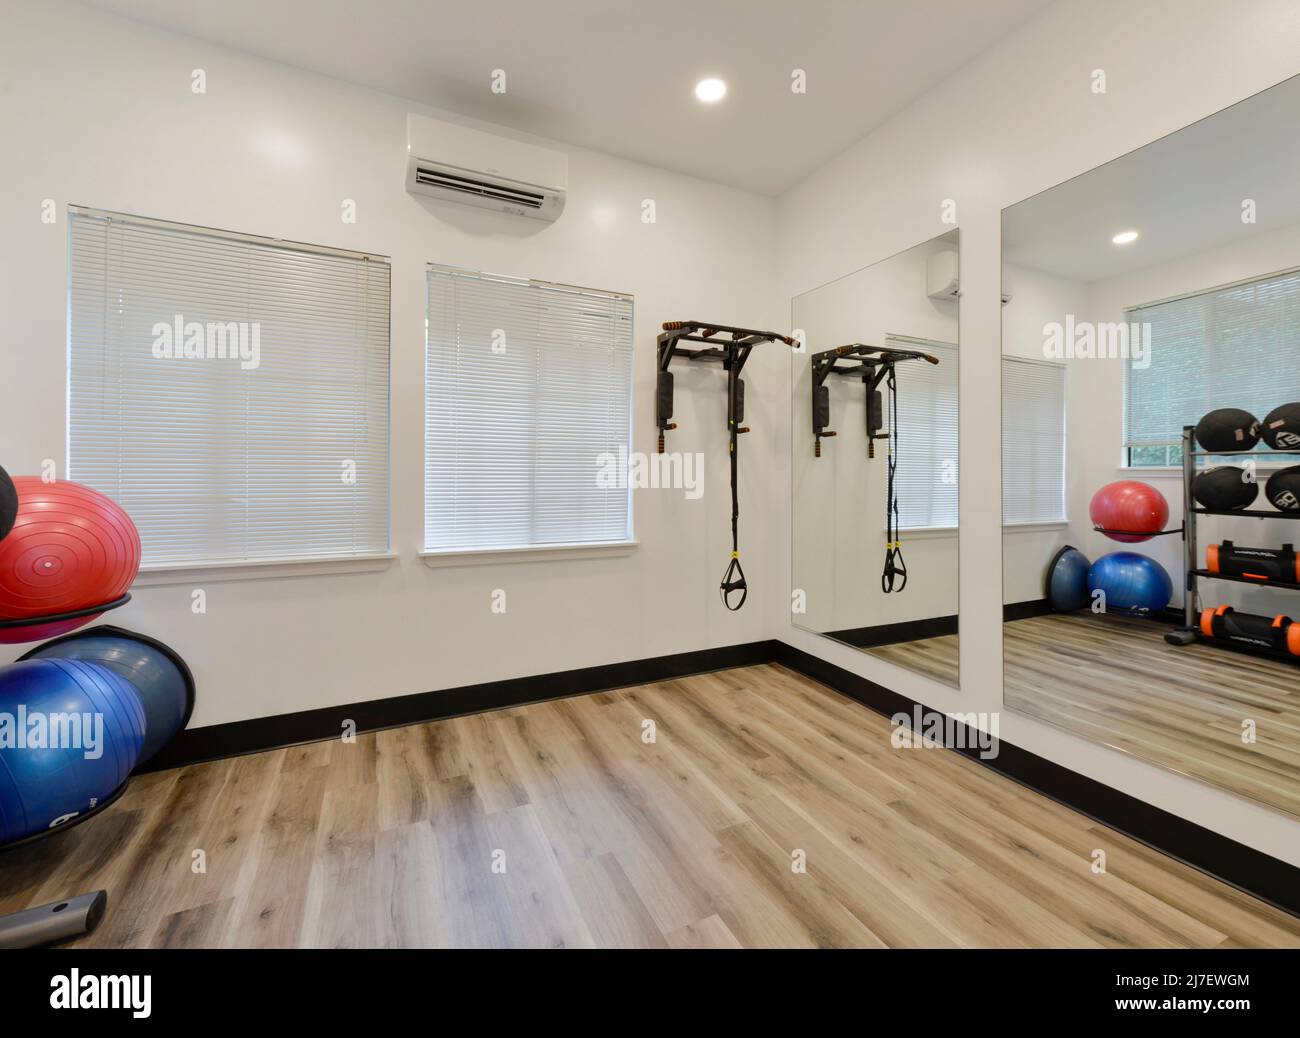 Modern fitness gym interior Stock Photo